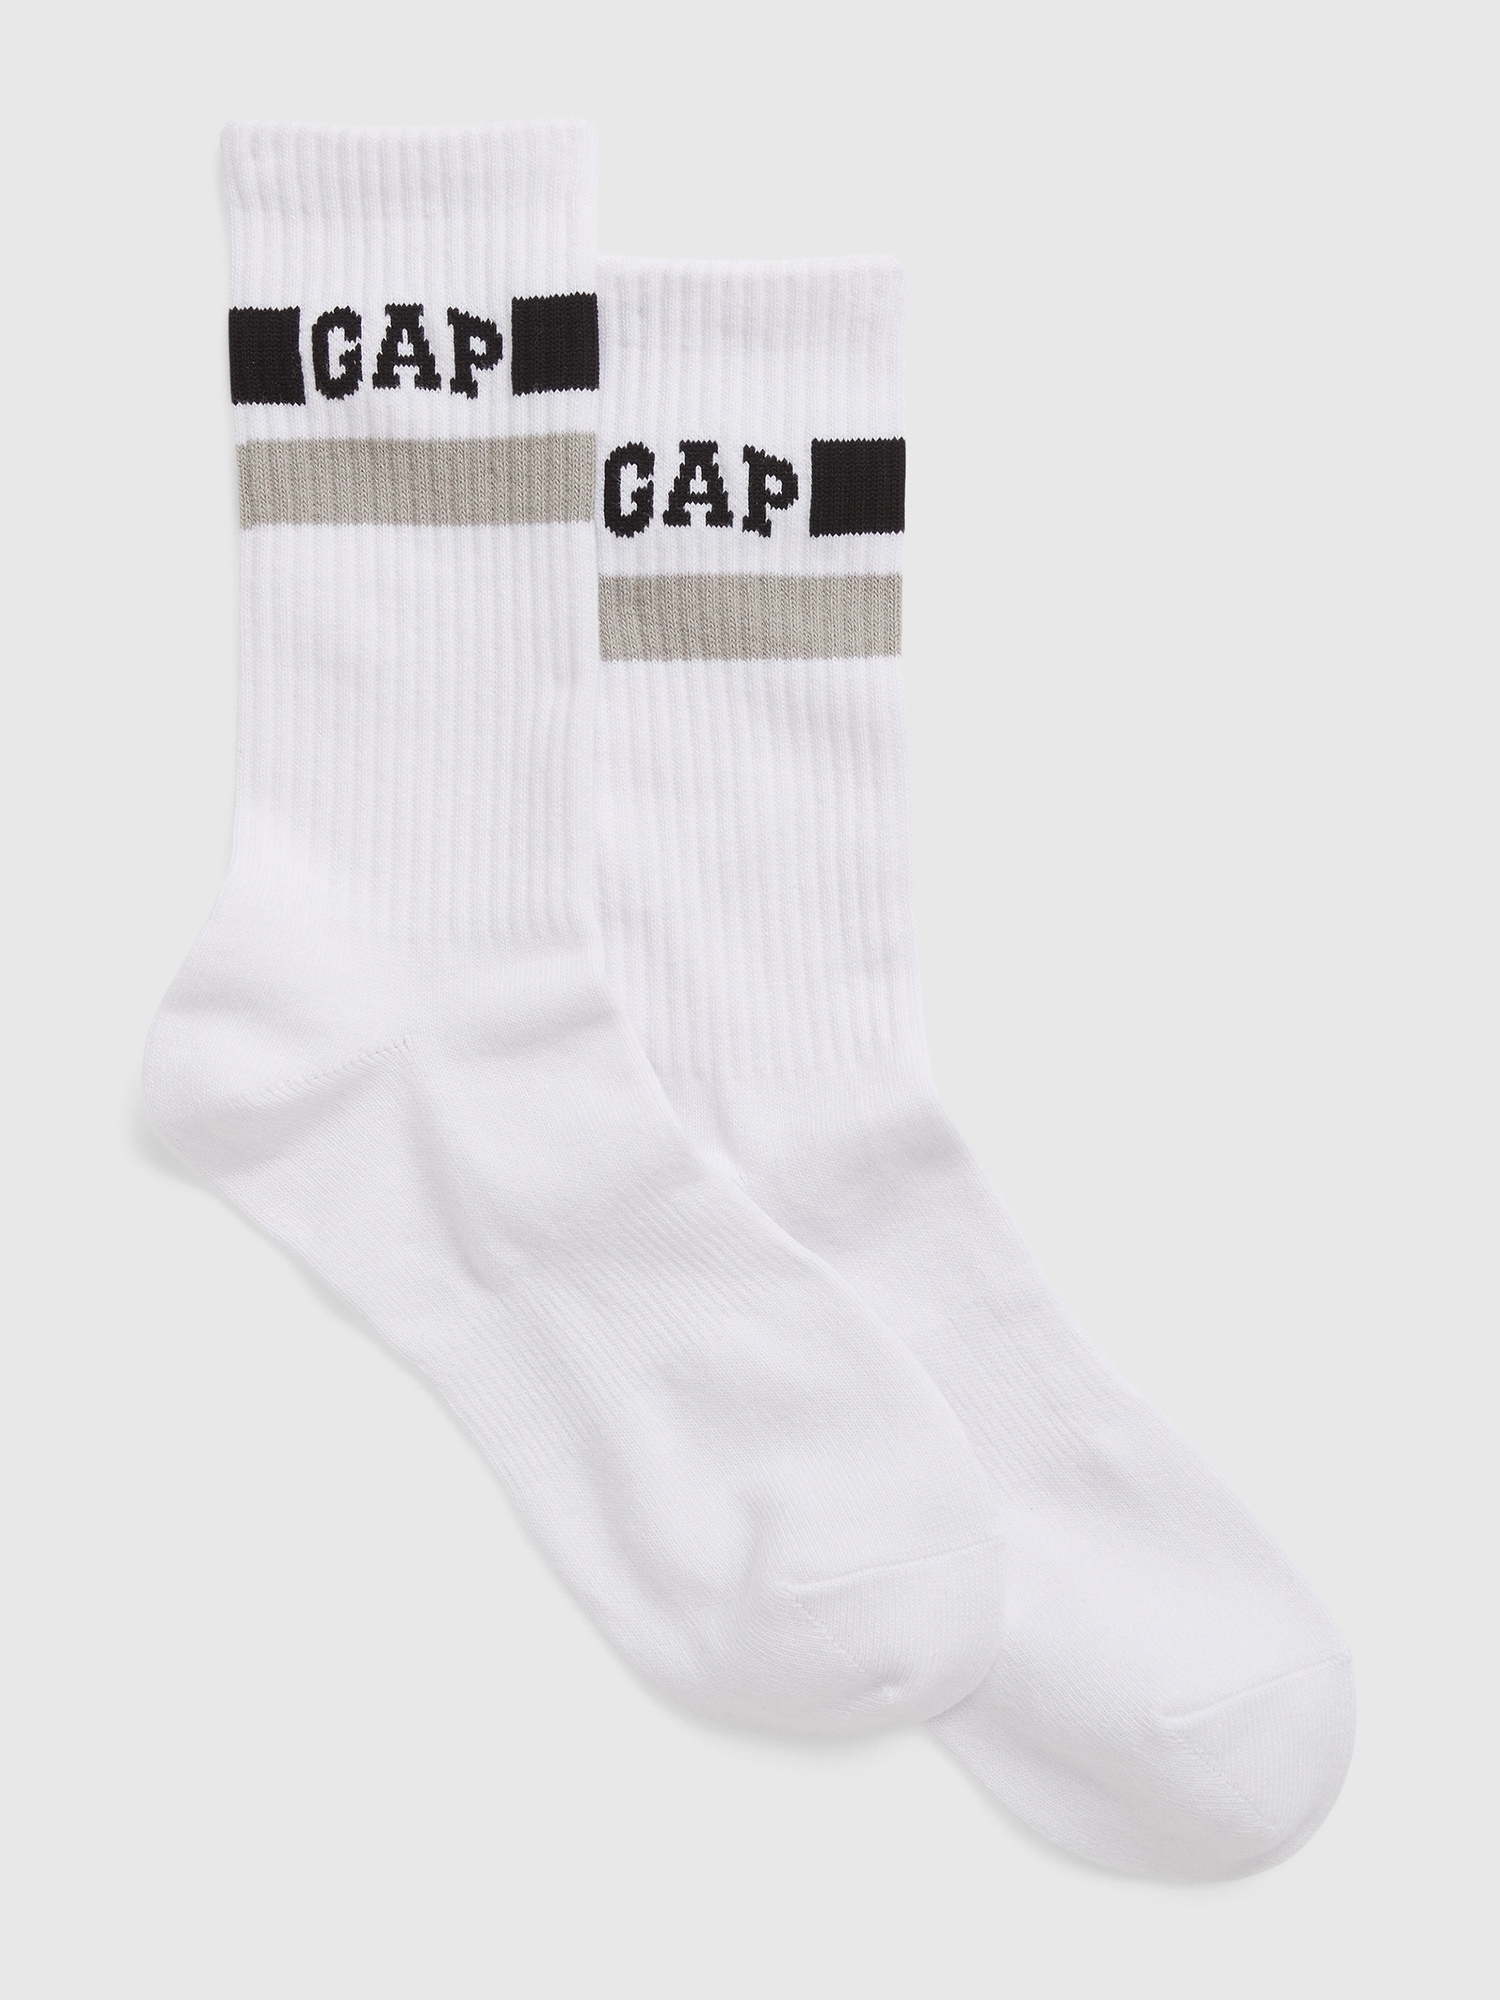 Gap Quarter Crew Socks black. 1